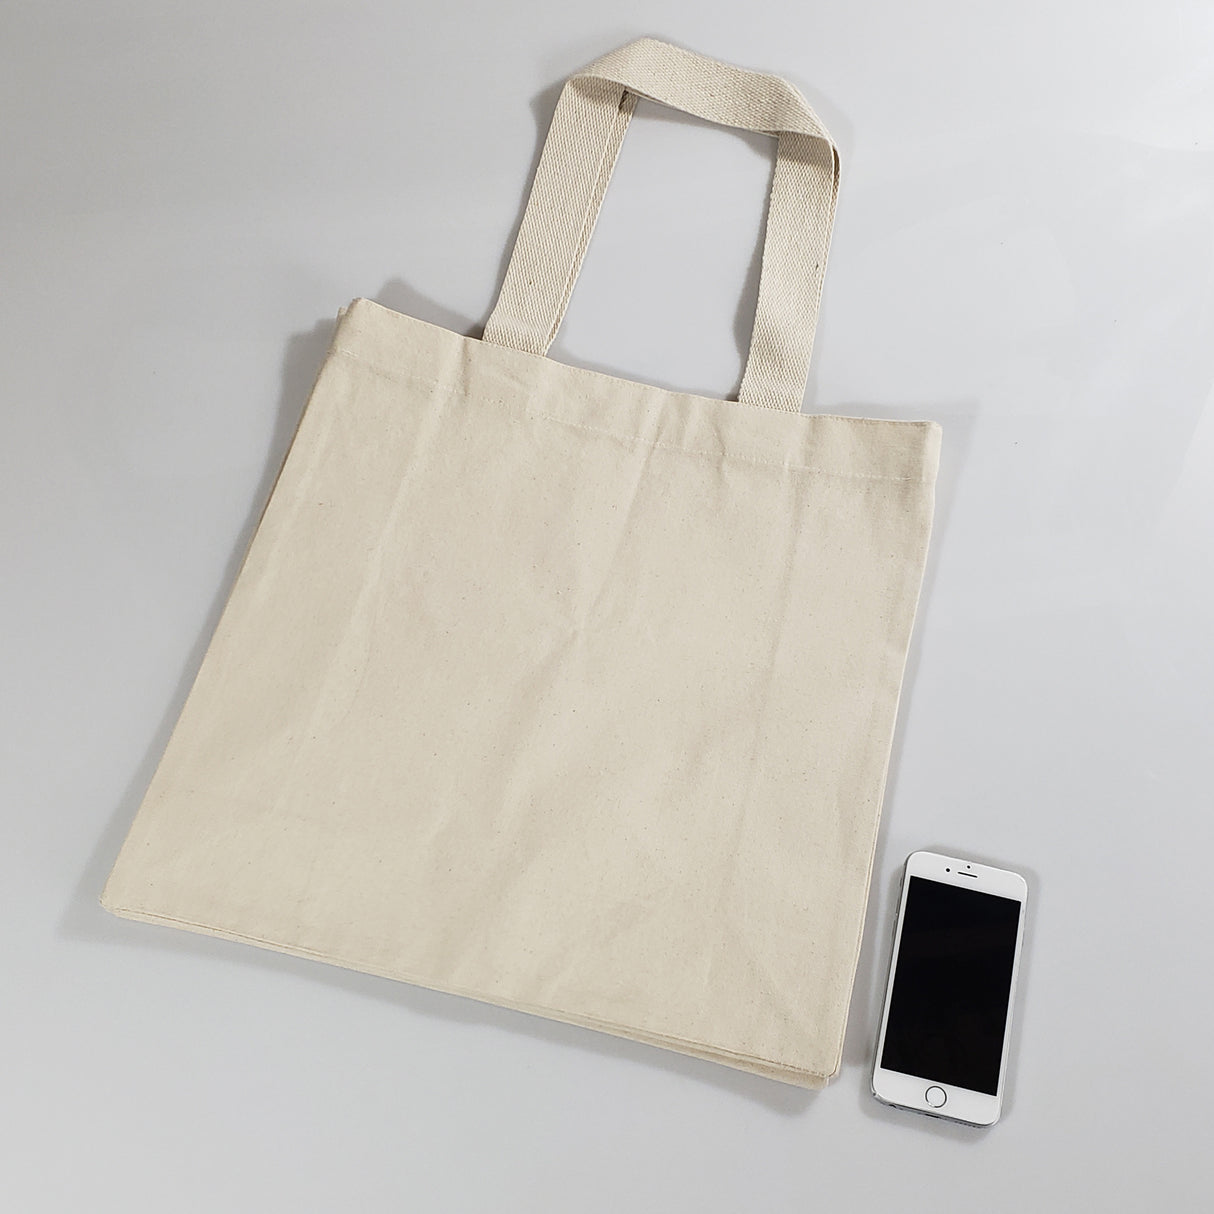 ultimete size canvas tote bag comparison with phone